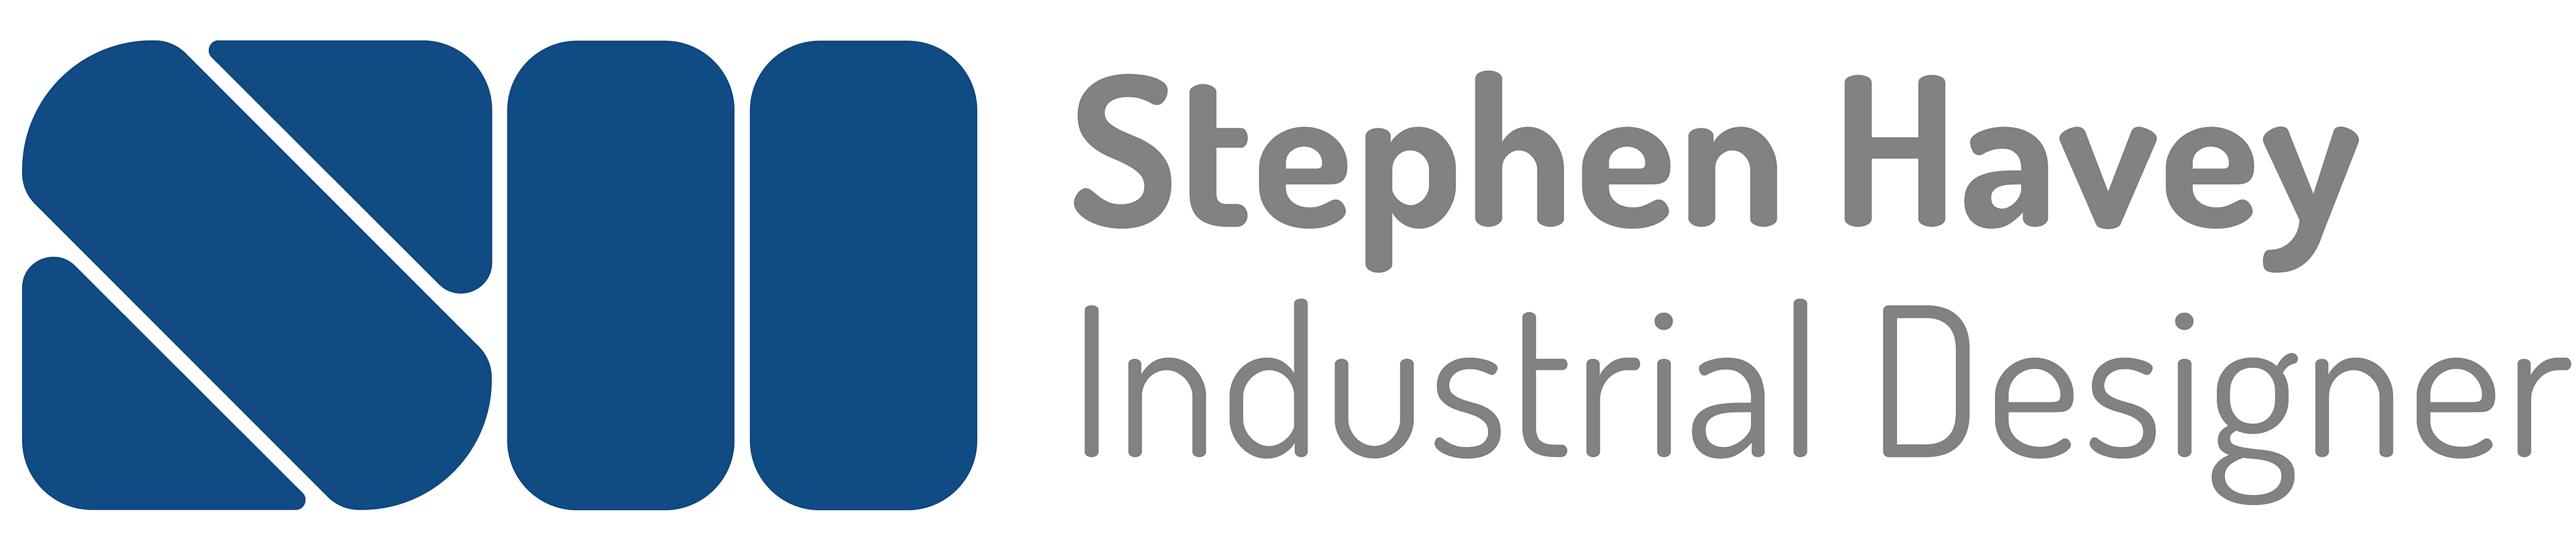 Stephen Havey: Industrial Designer